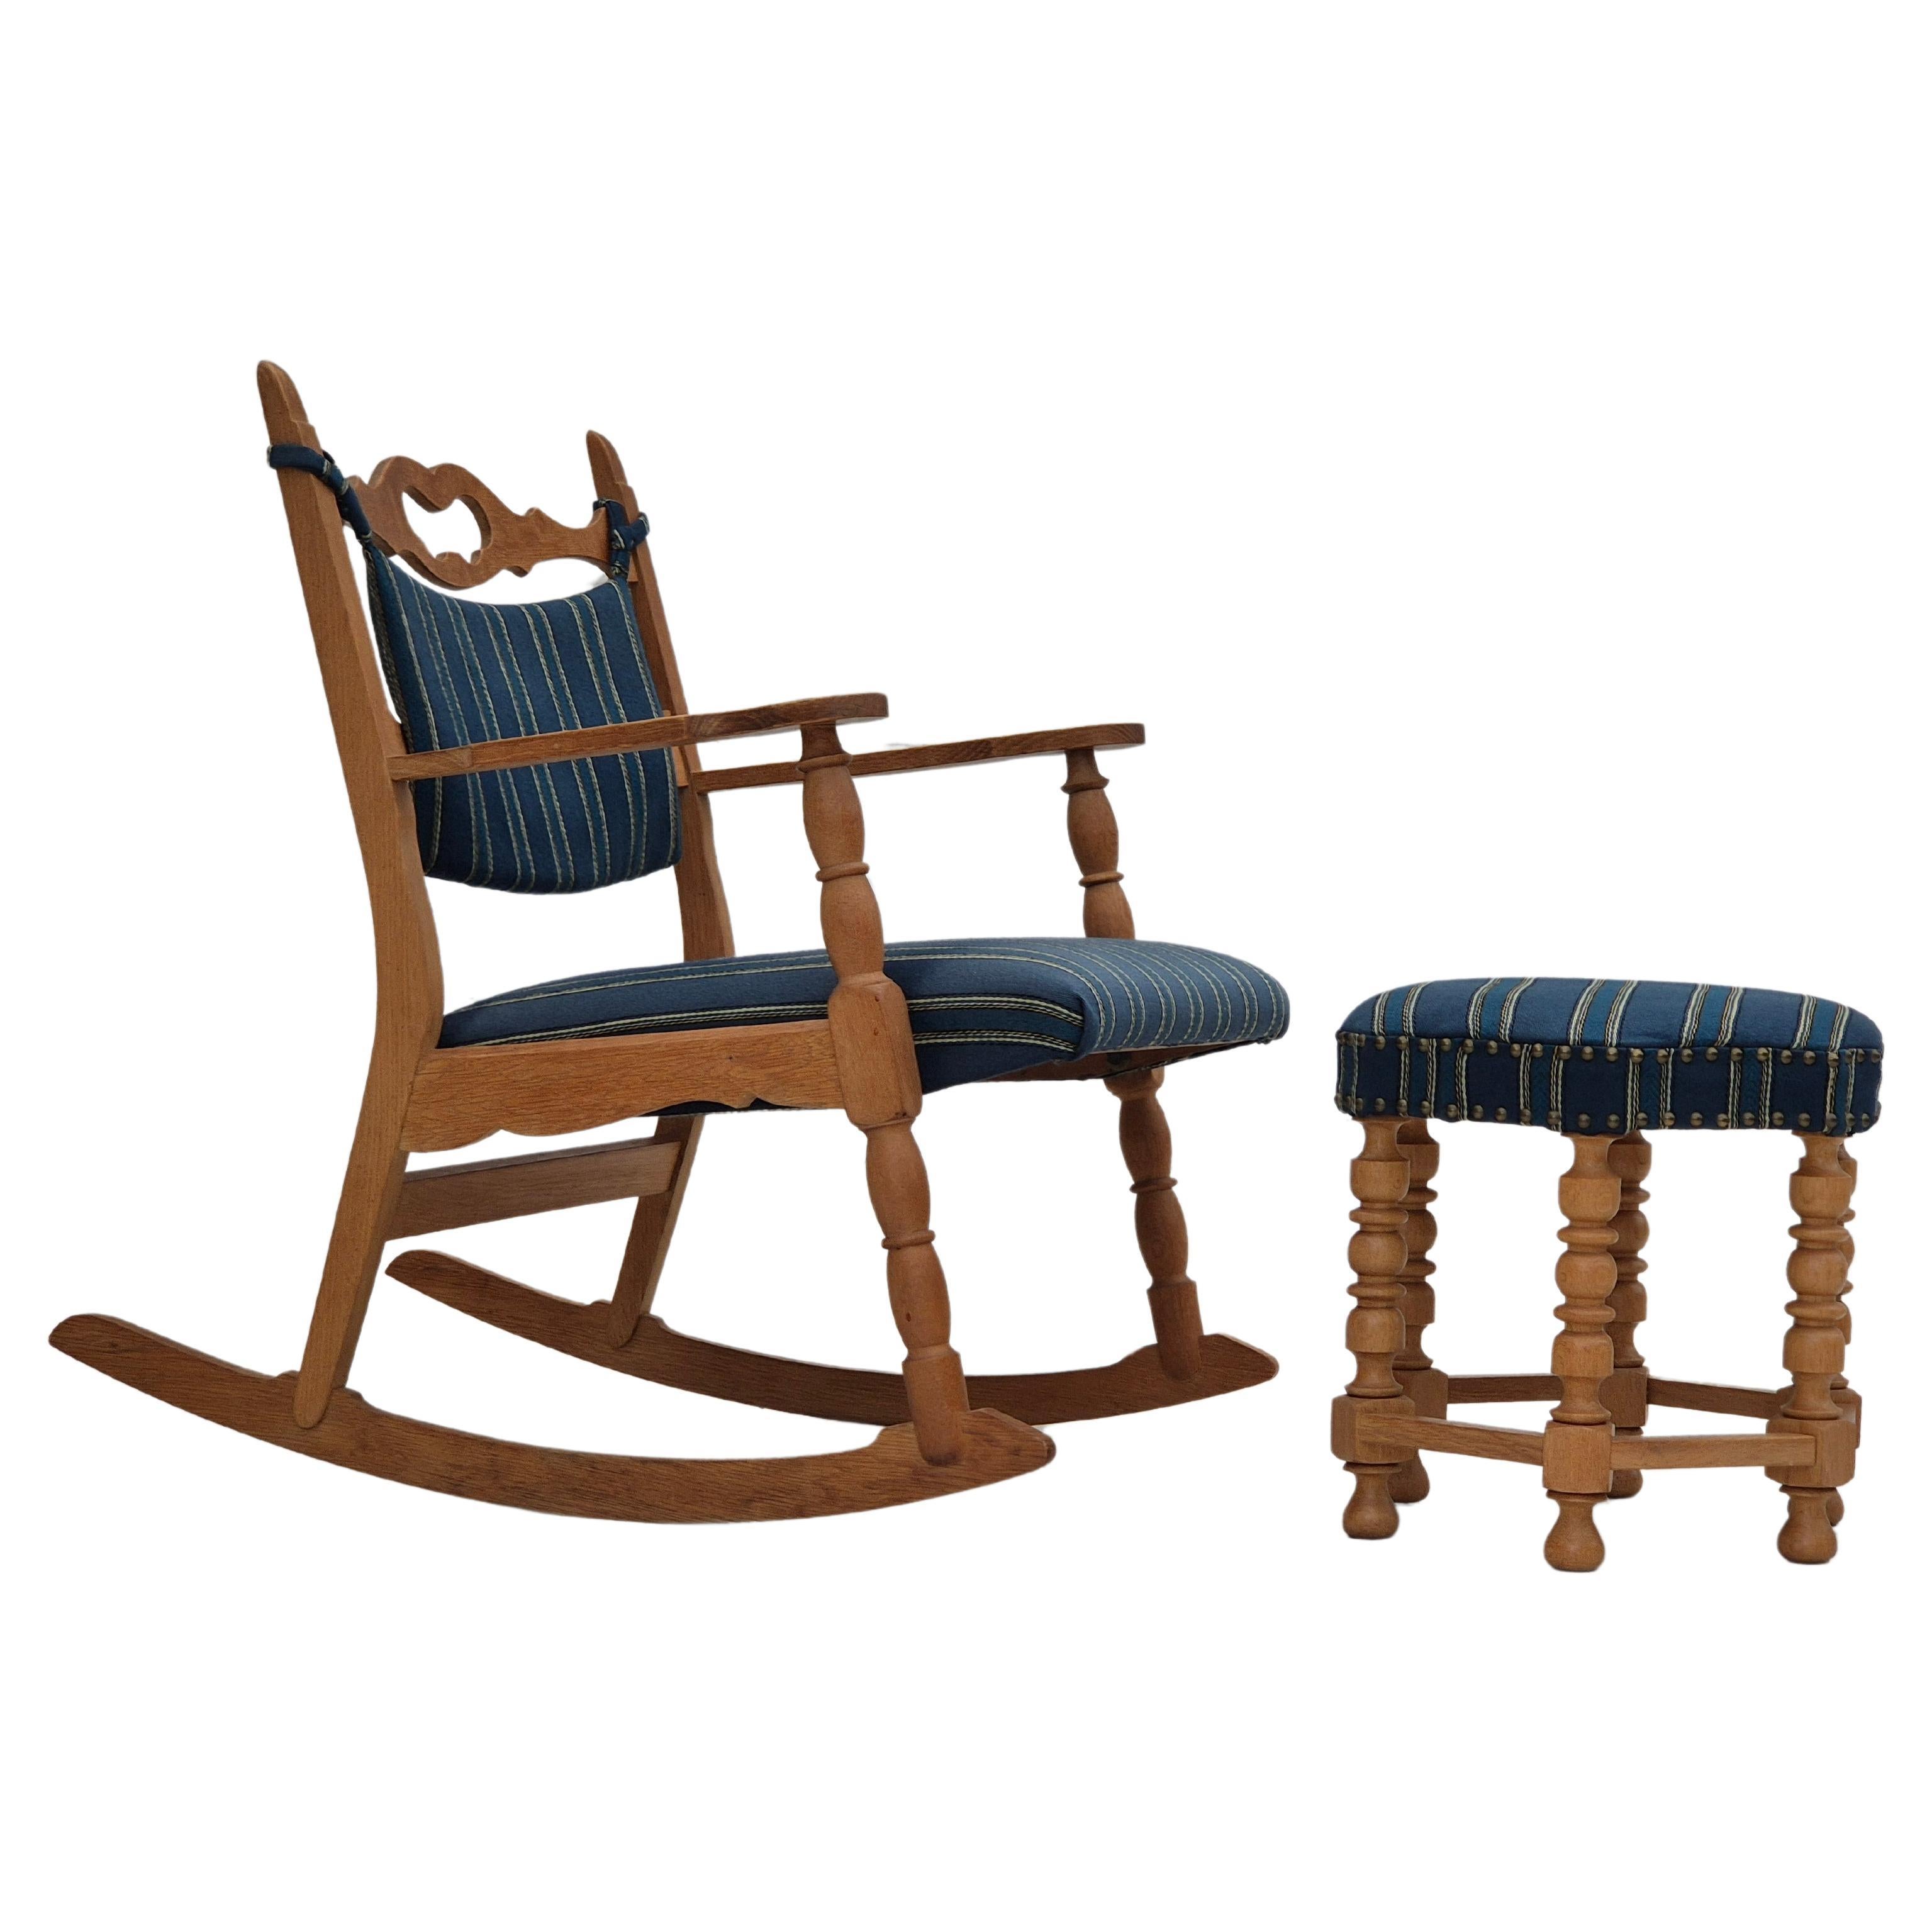 1970s, Danish design, oak wood rocking chair with footstool, furniture wool.